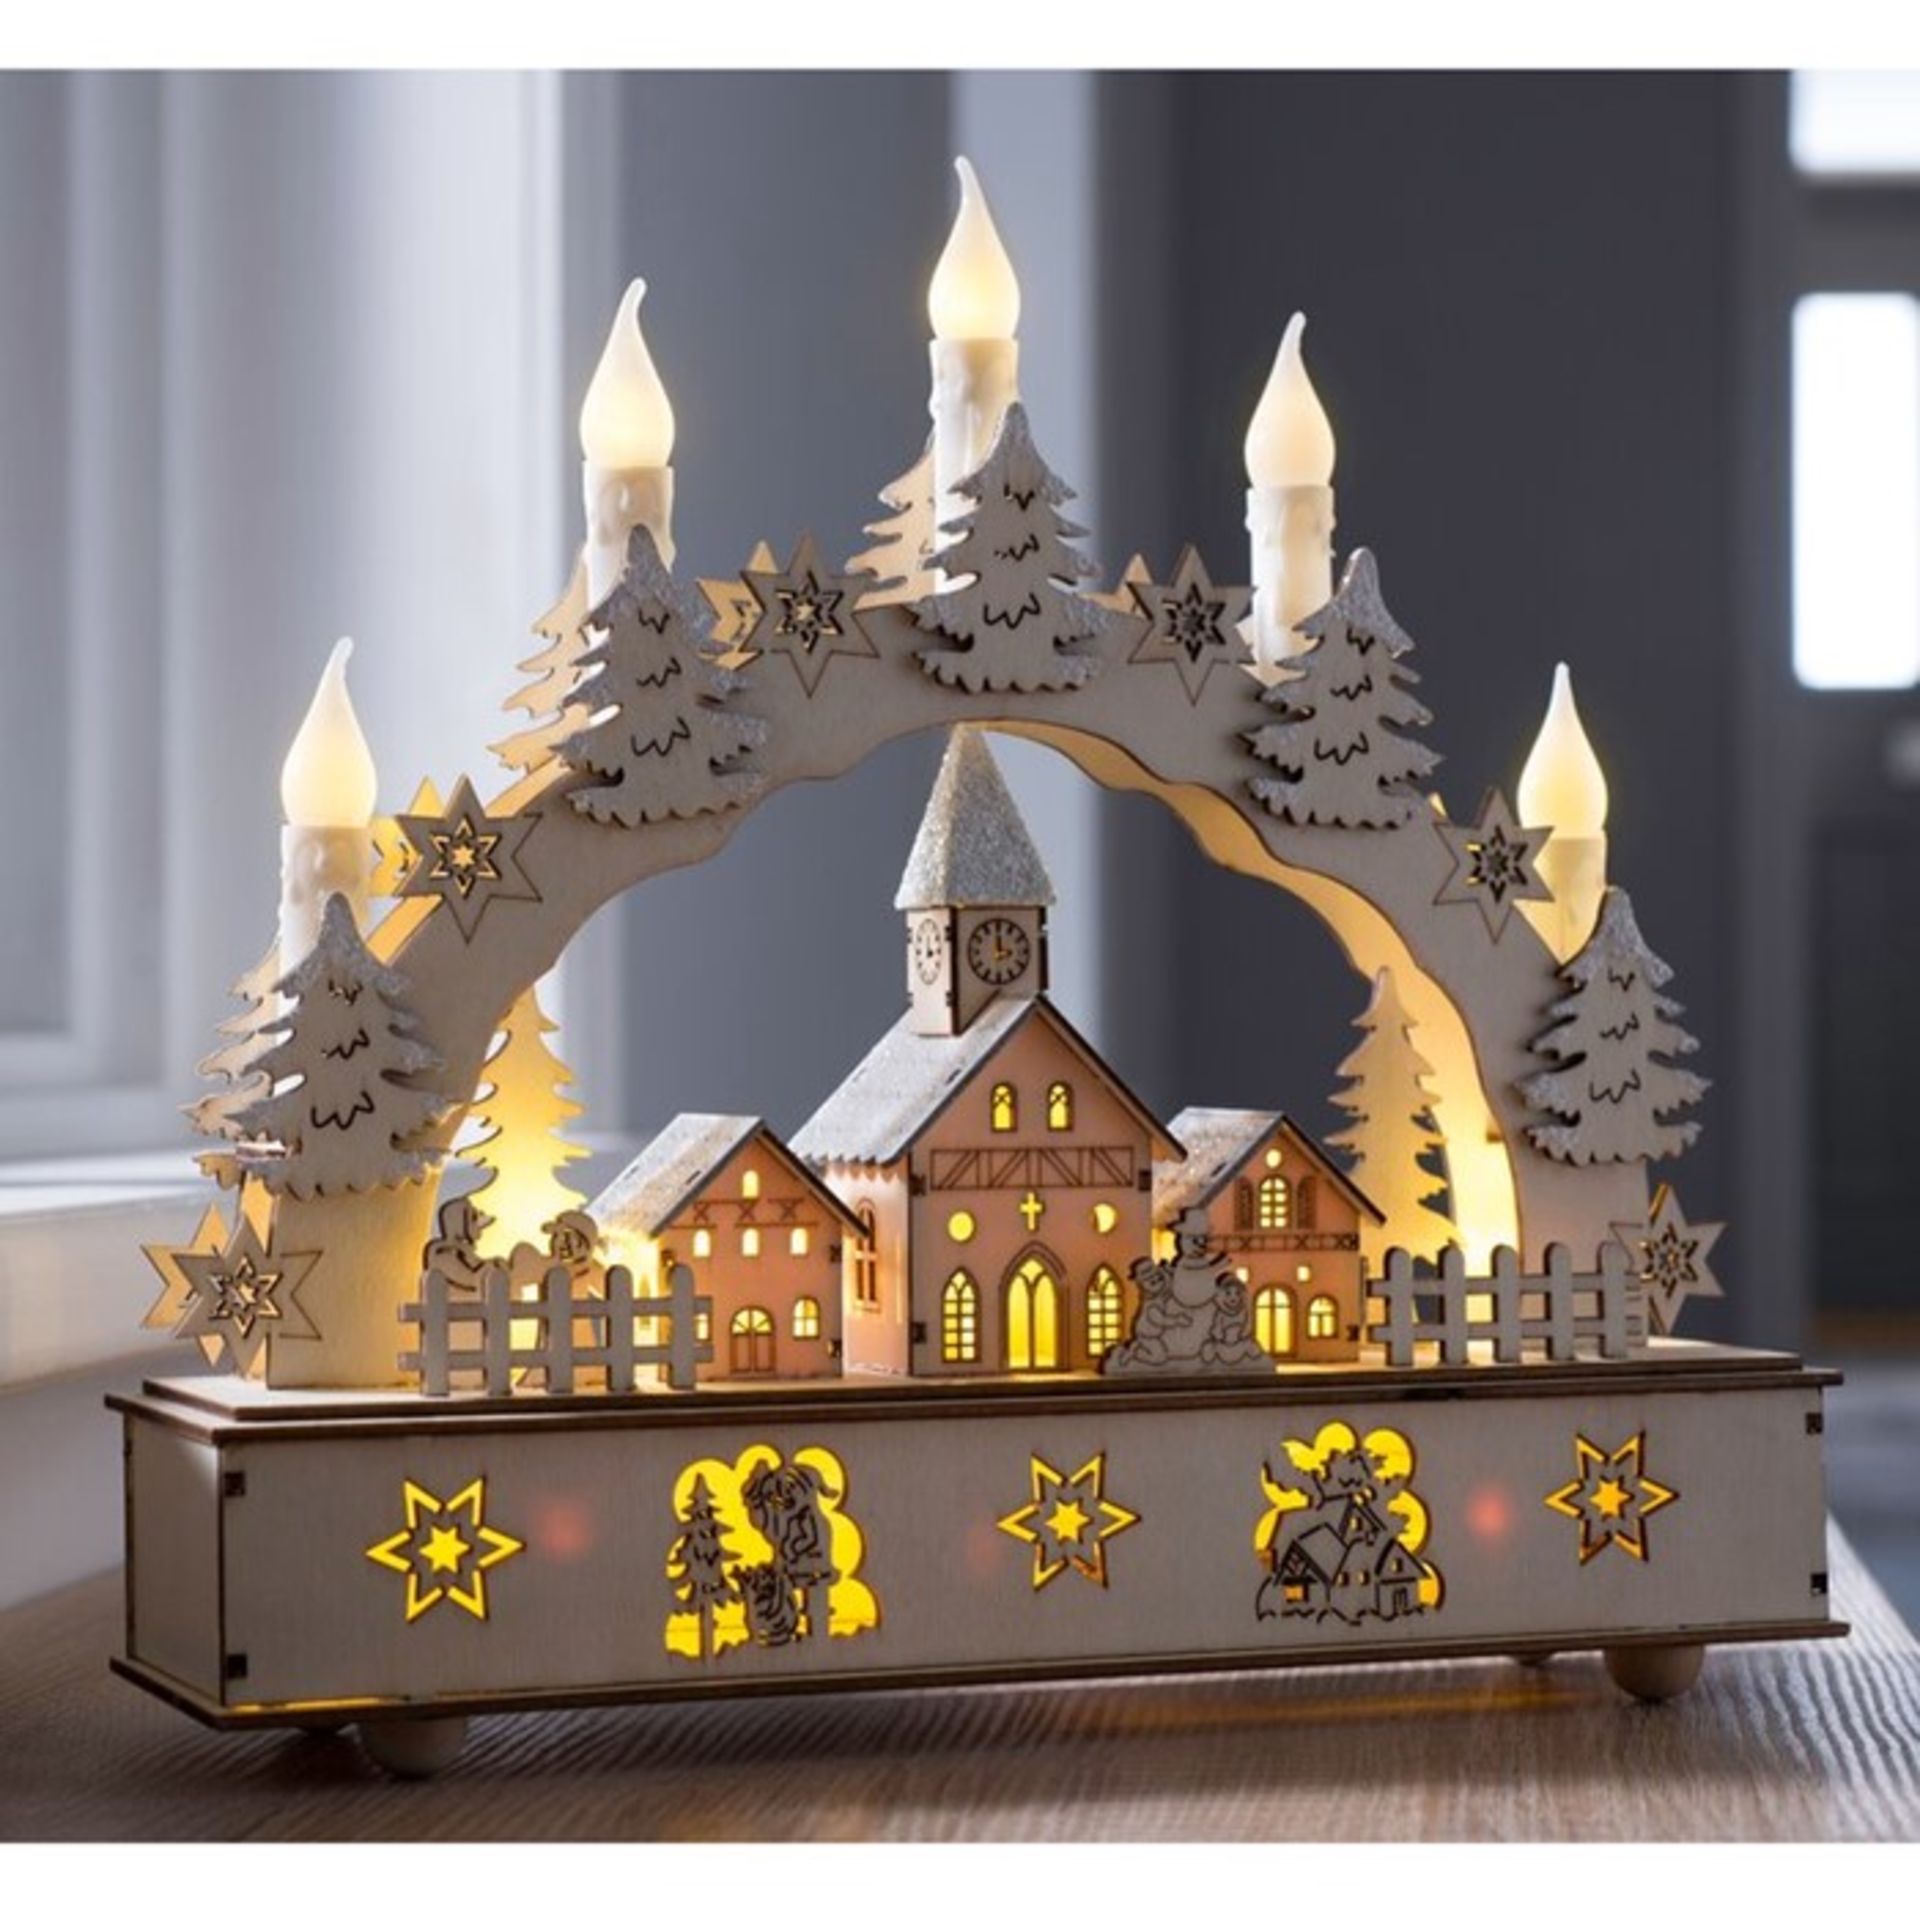 The Seasonal Aisle Pre-lit Village Scene Candle Bridge Christmas Decoration (HOAI9946 - 14634/13)